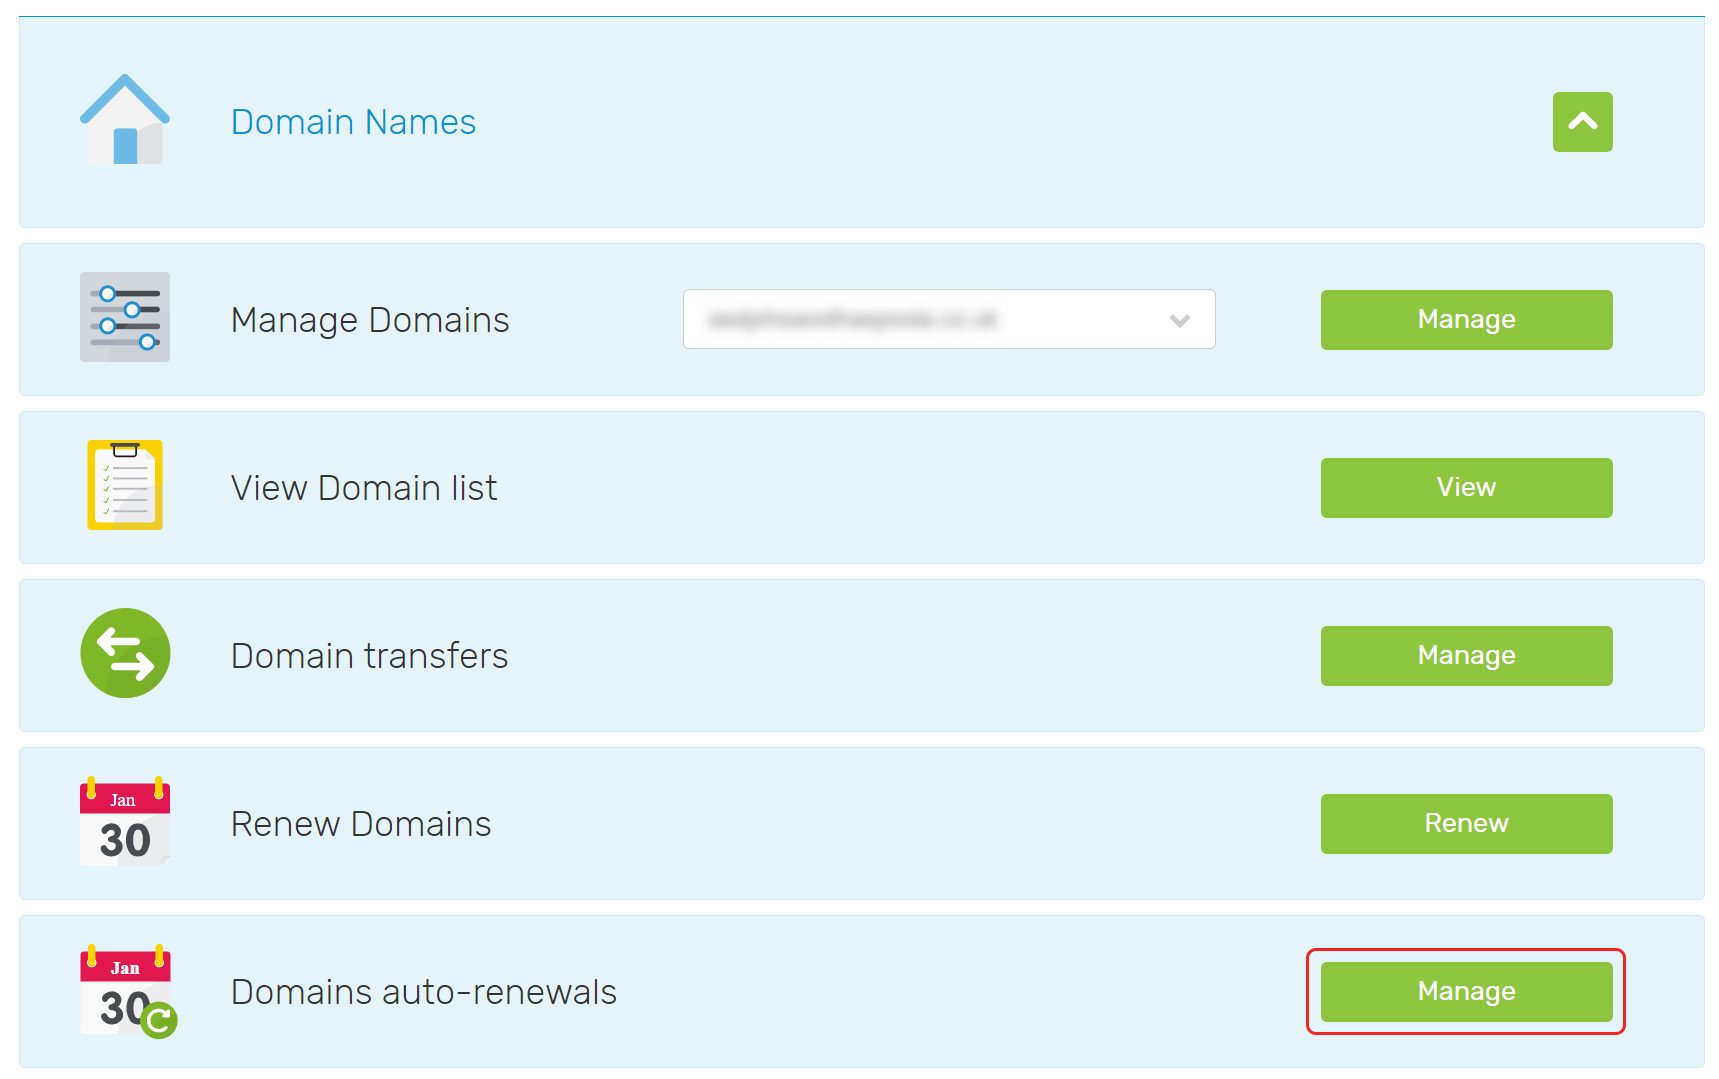 Manage Domain auto-renewals